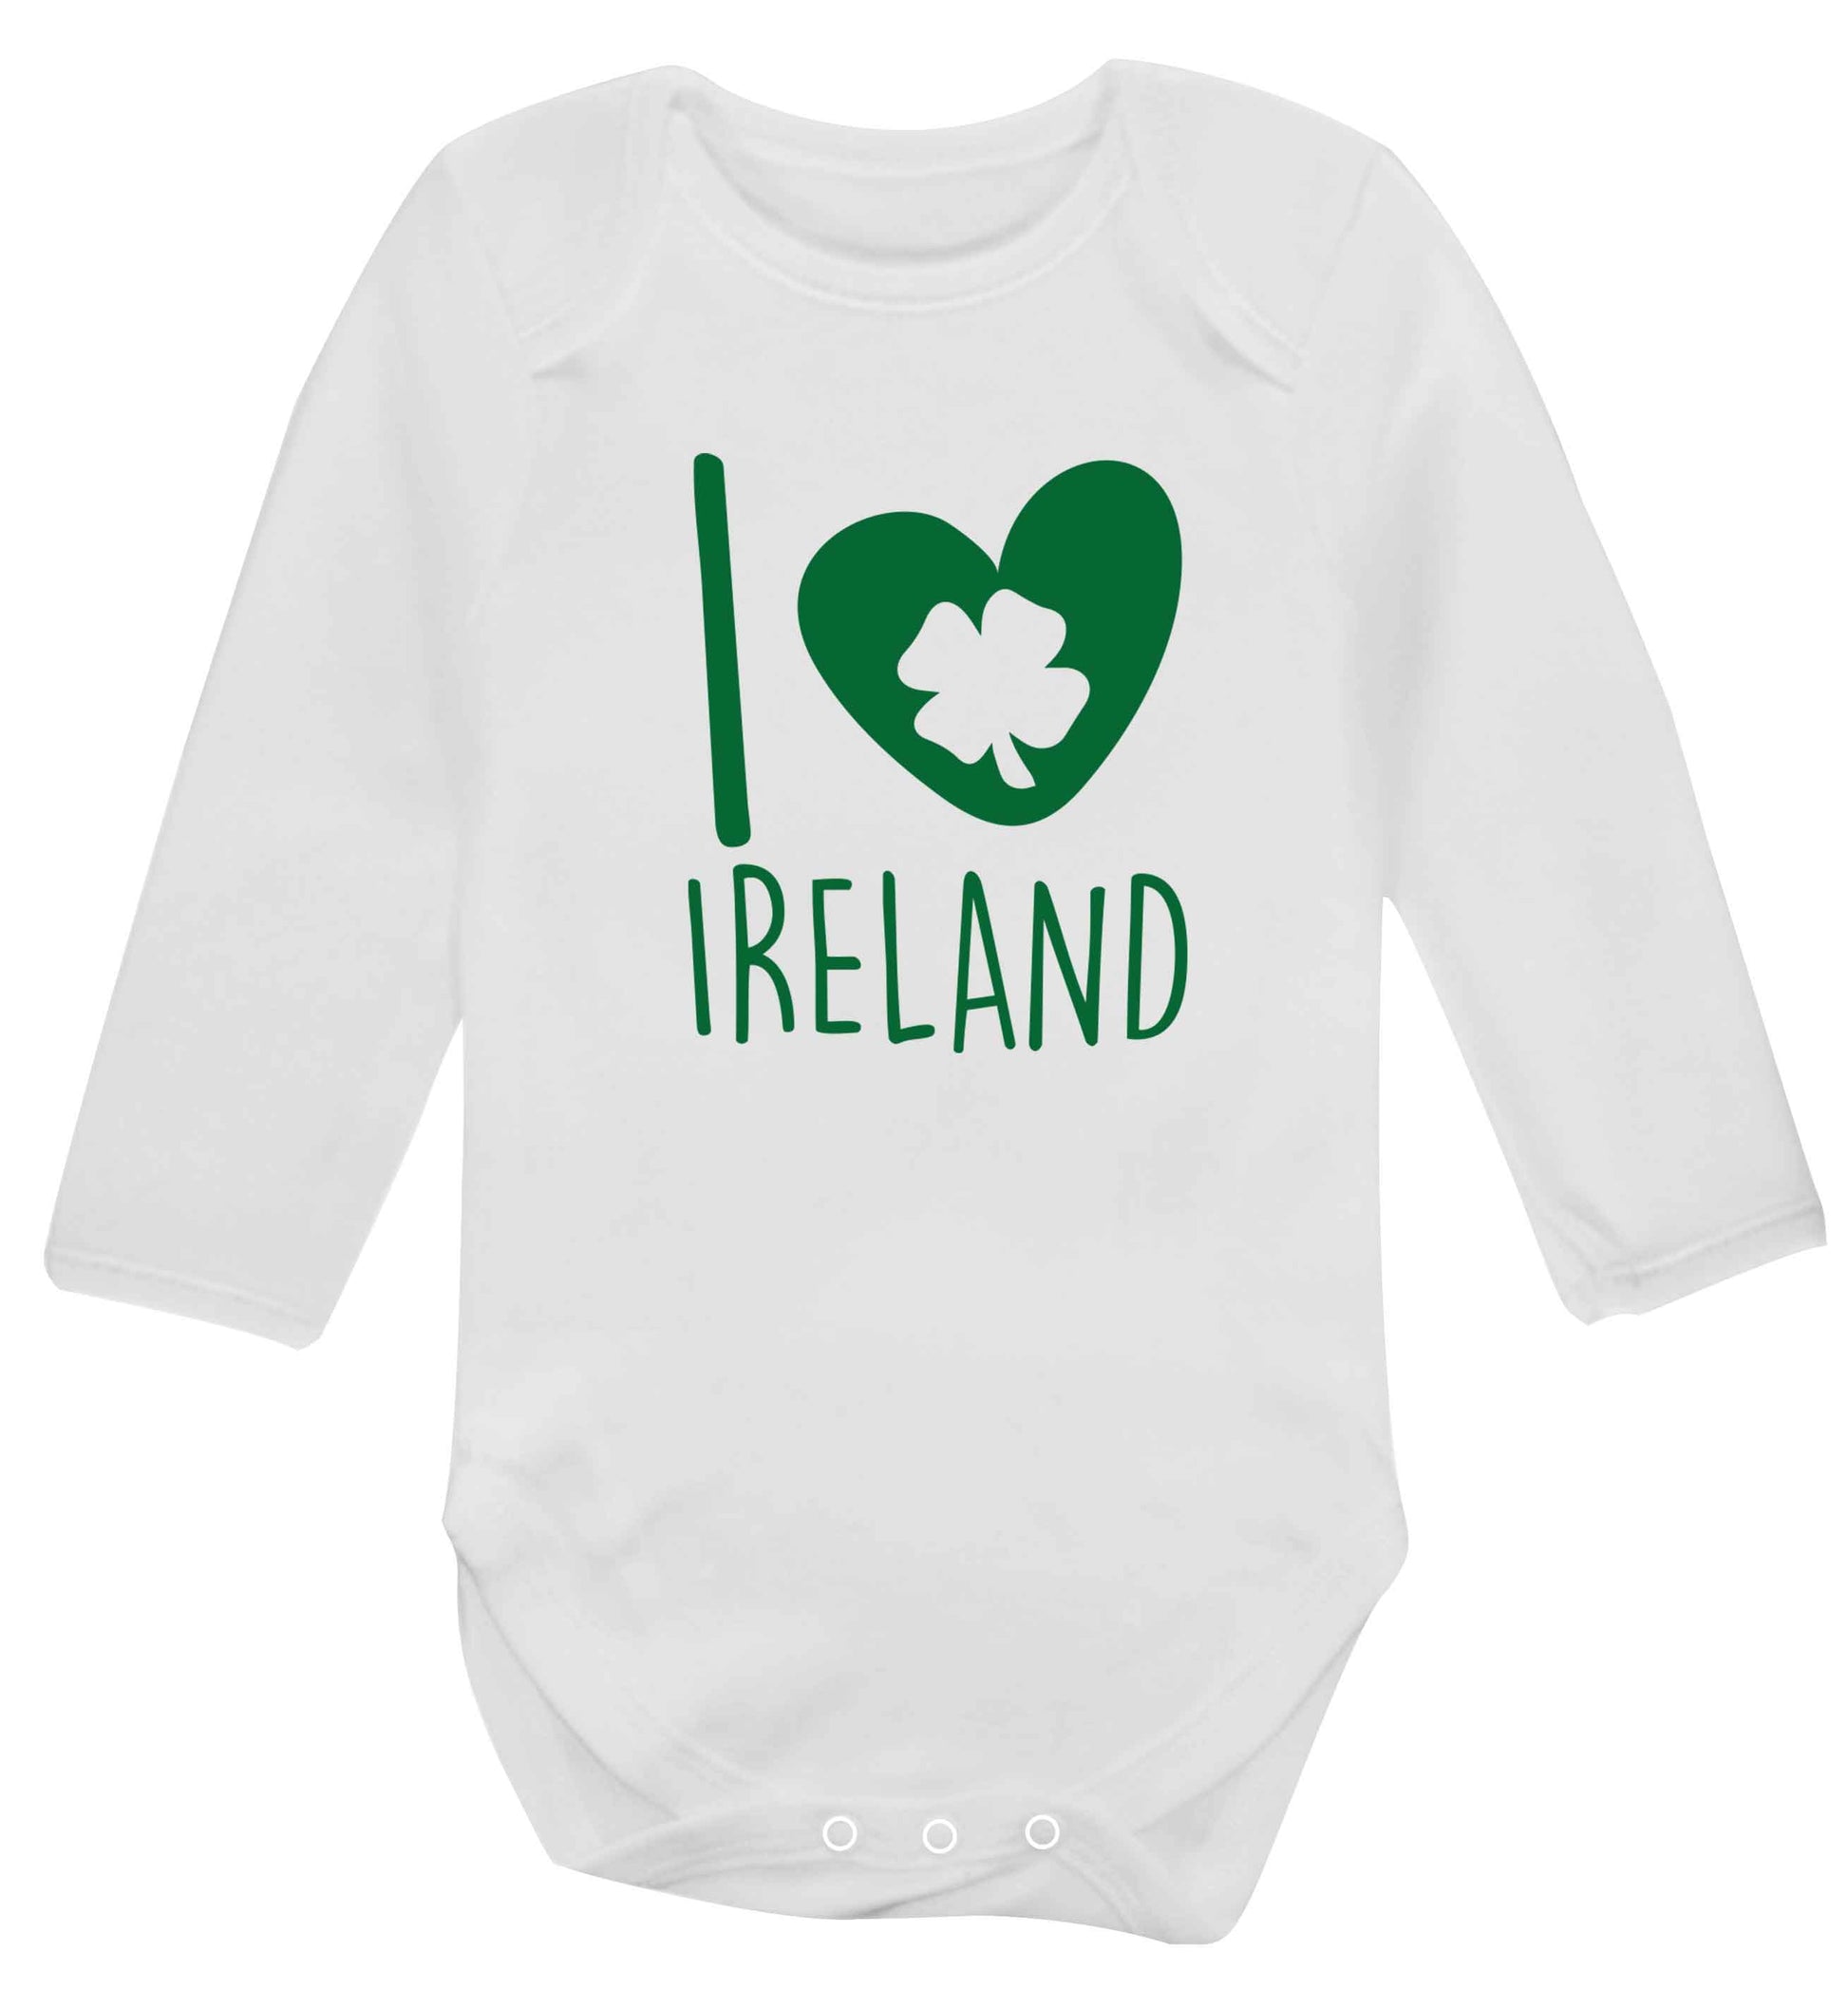 I love Ireland baby vest long sleeved white 6-12 months